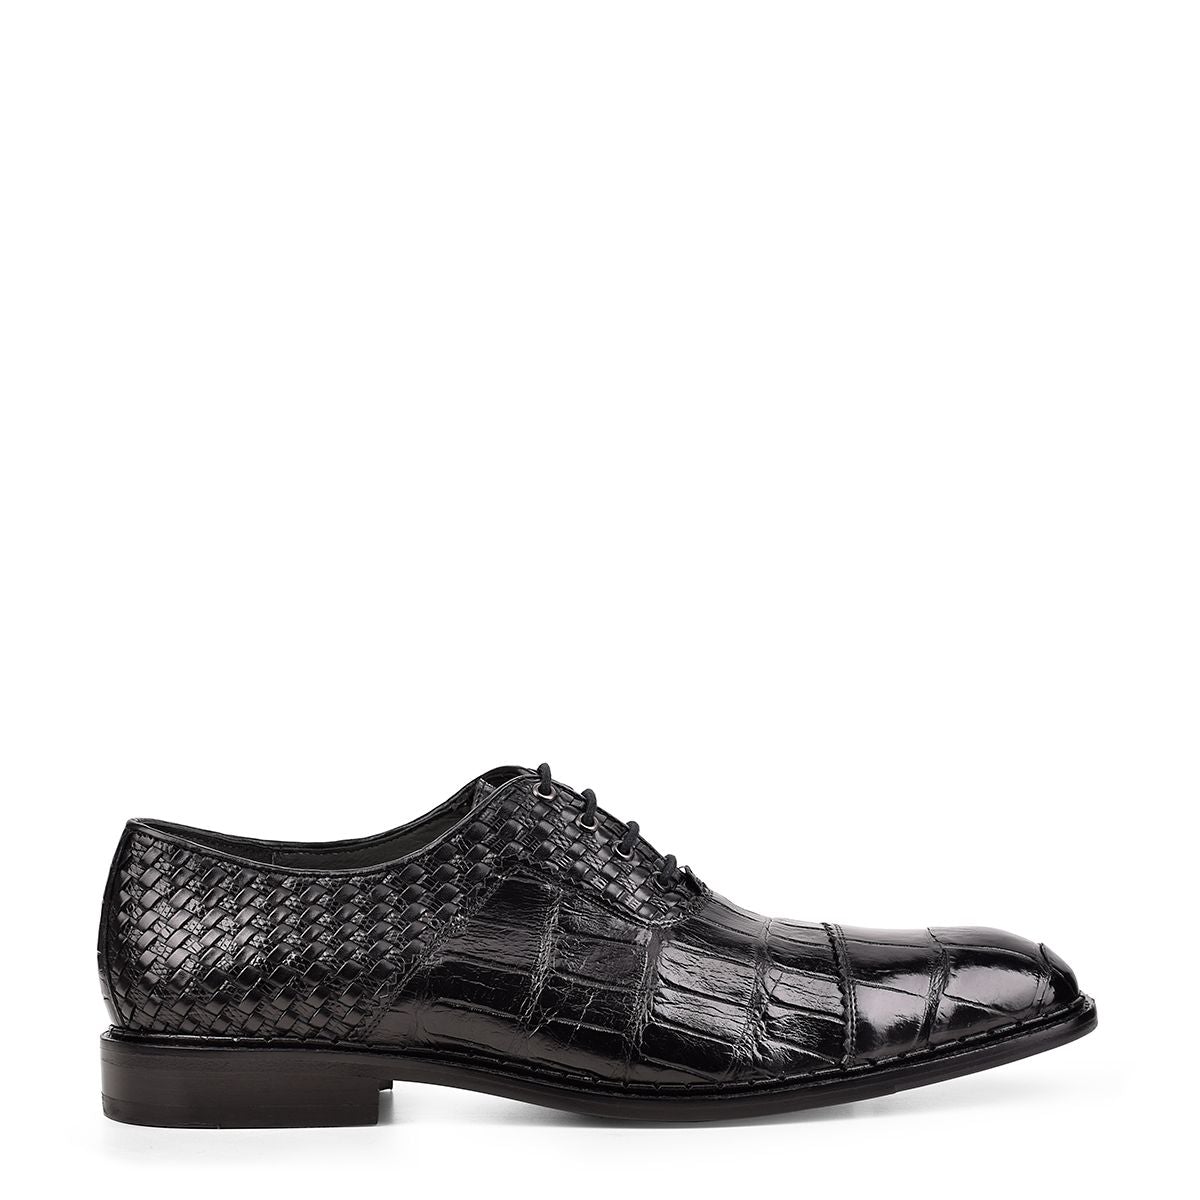 42FLPTE - Cuadra black fashion dress alligator woven oxford shoes for men-Kuet.us